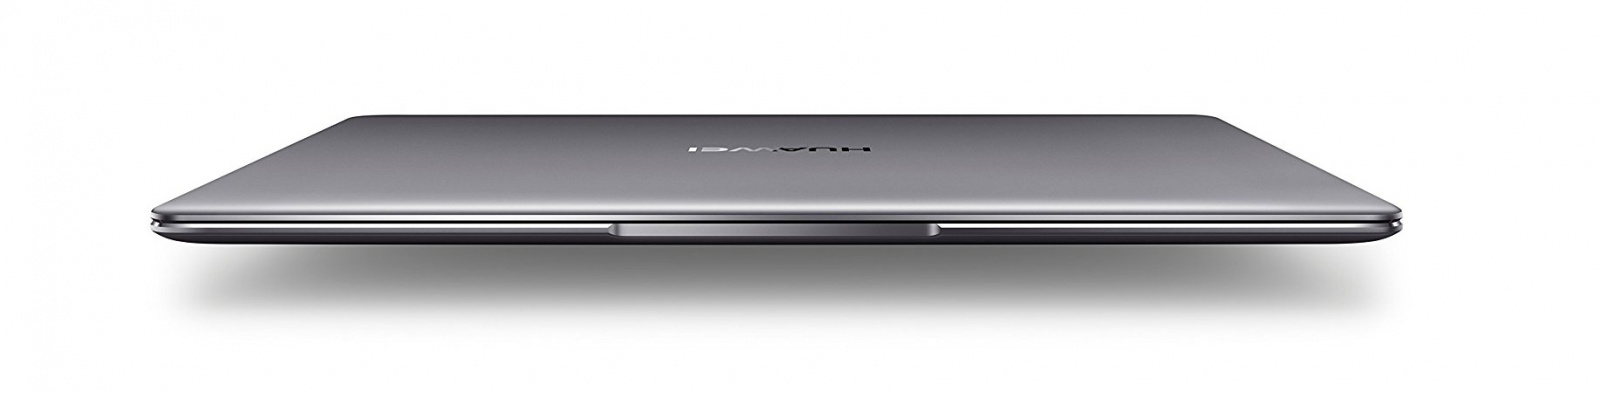 тонкий и легкий ноутбук Huawei MateBook X 